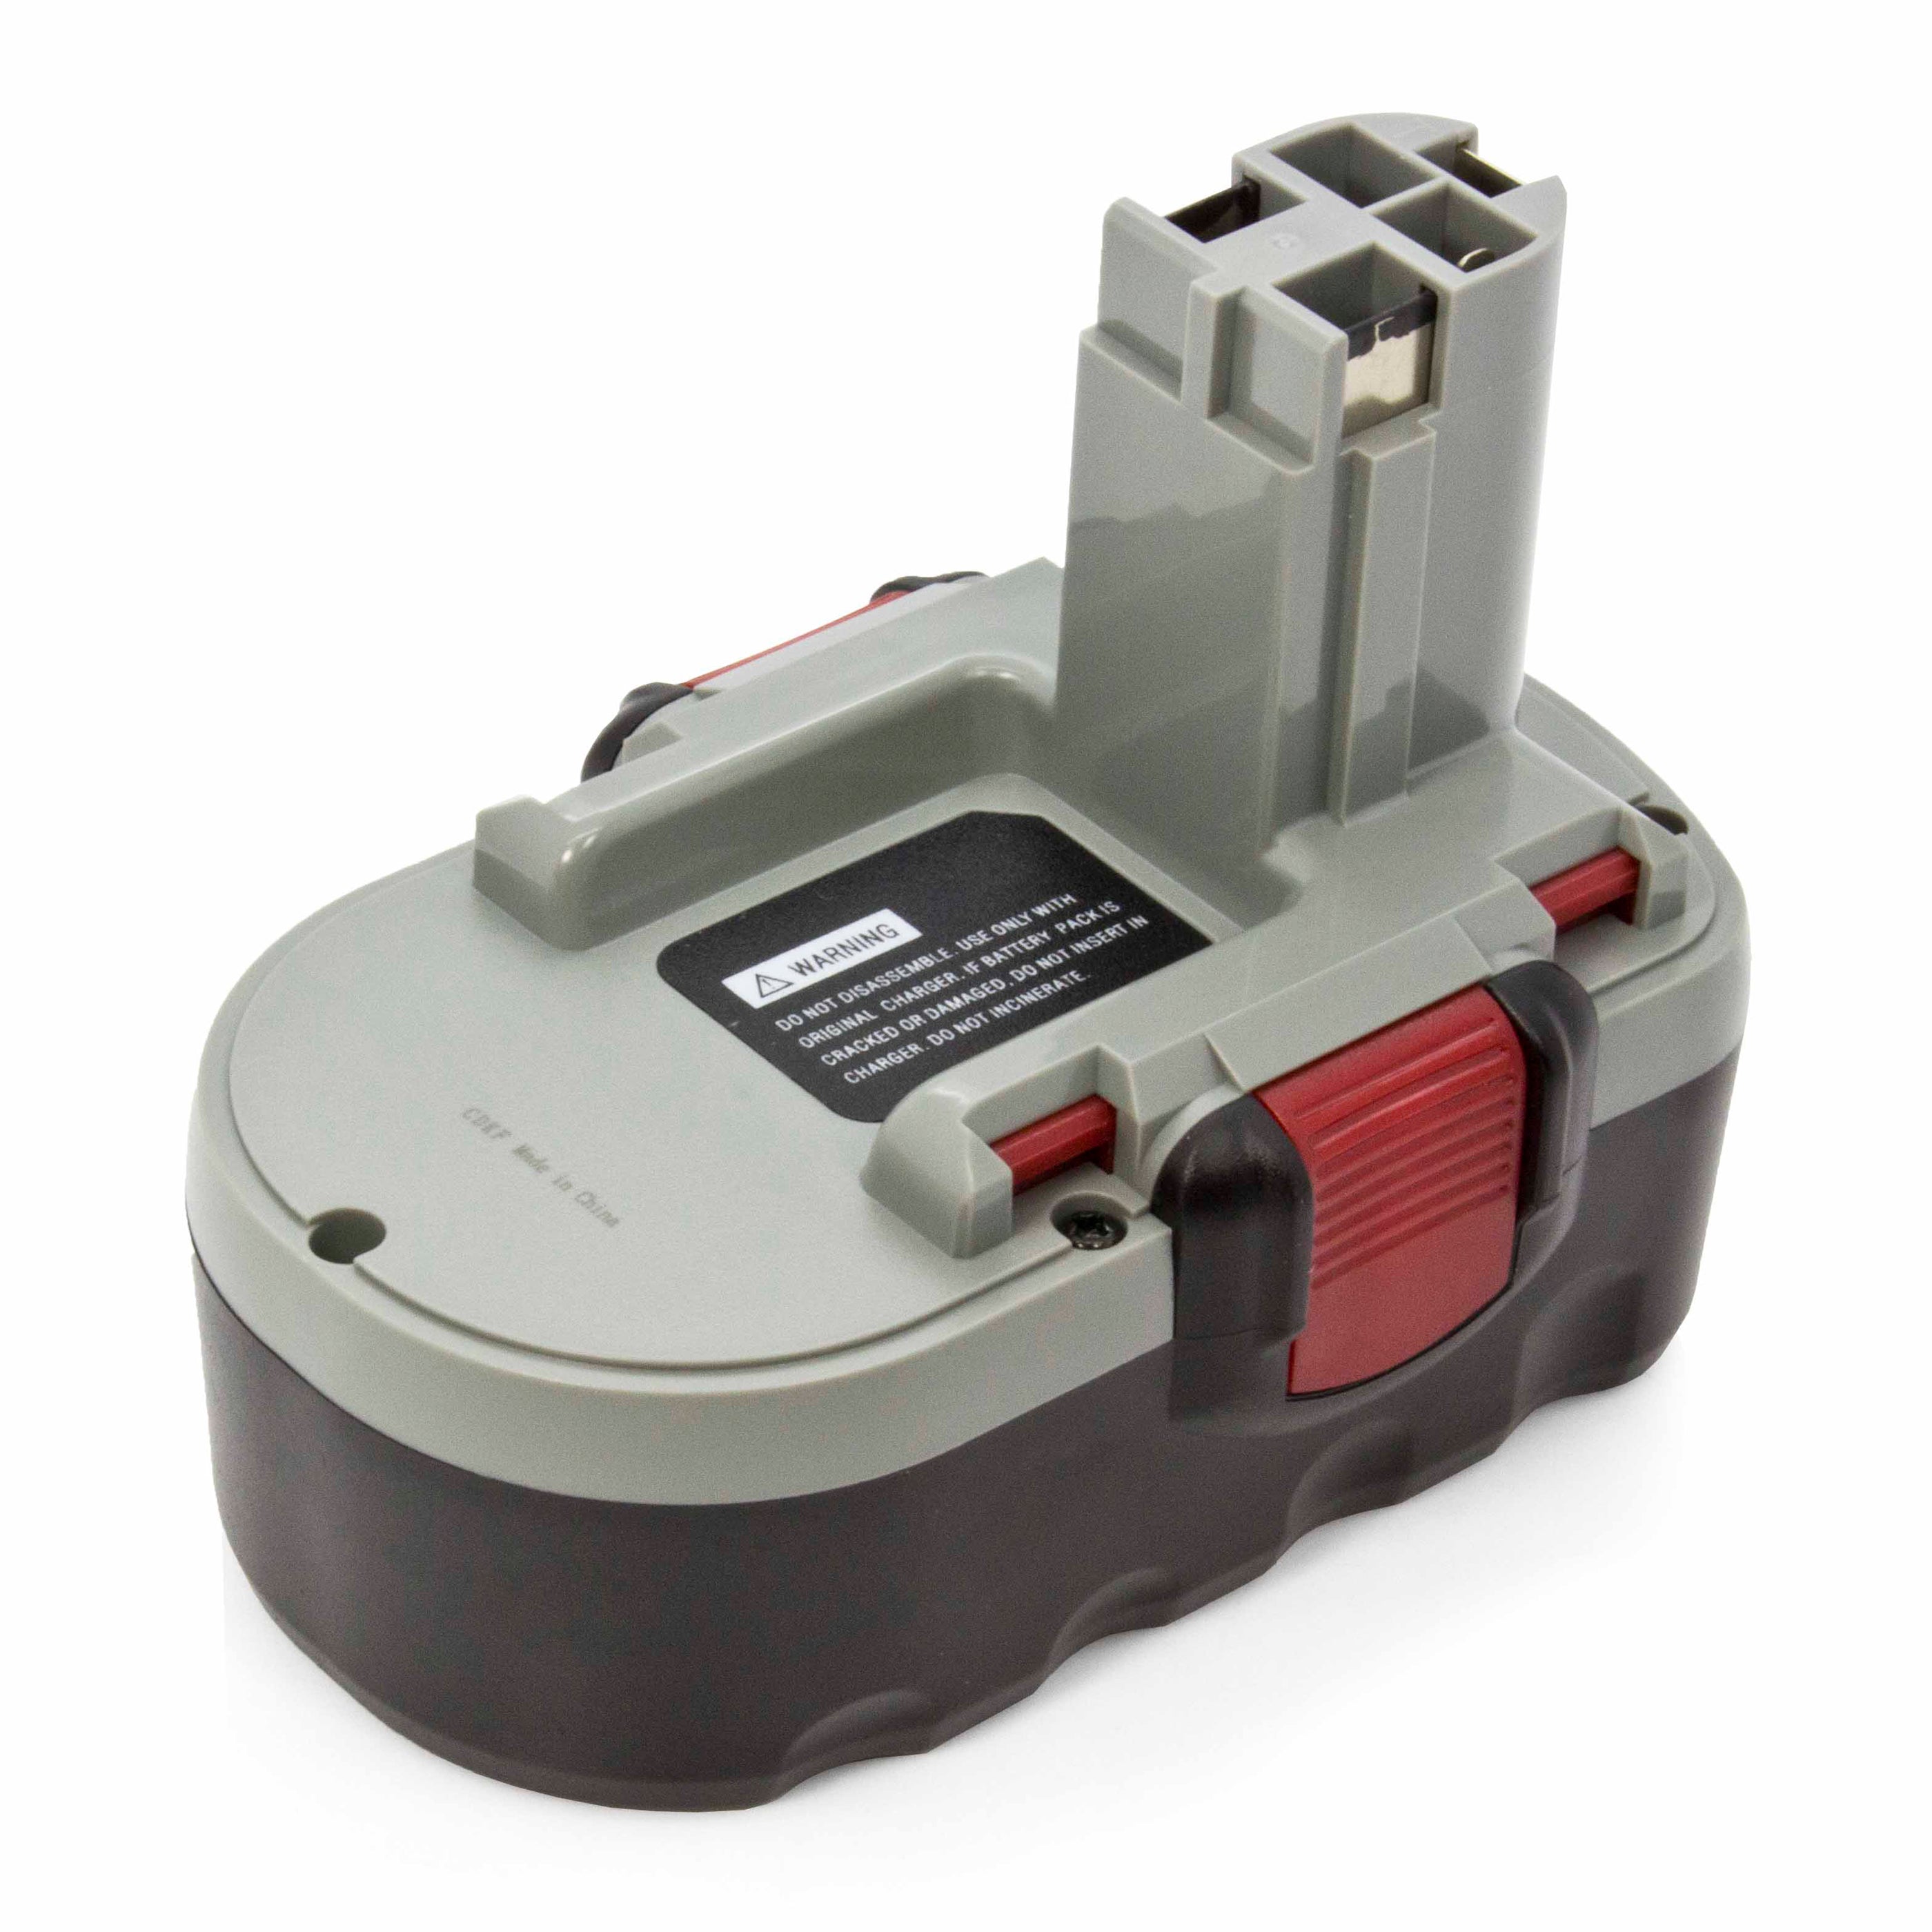 Batterie accumulateur 18 volts aspirateur Bosch Unlimited Serie 8